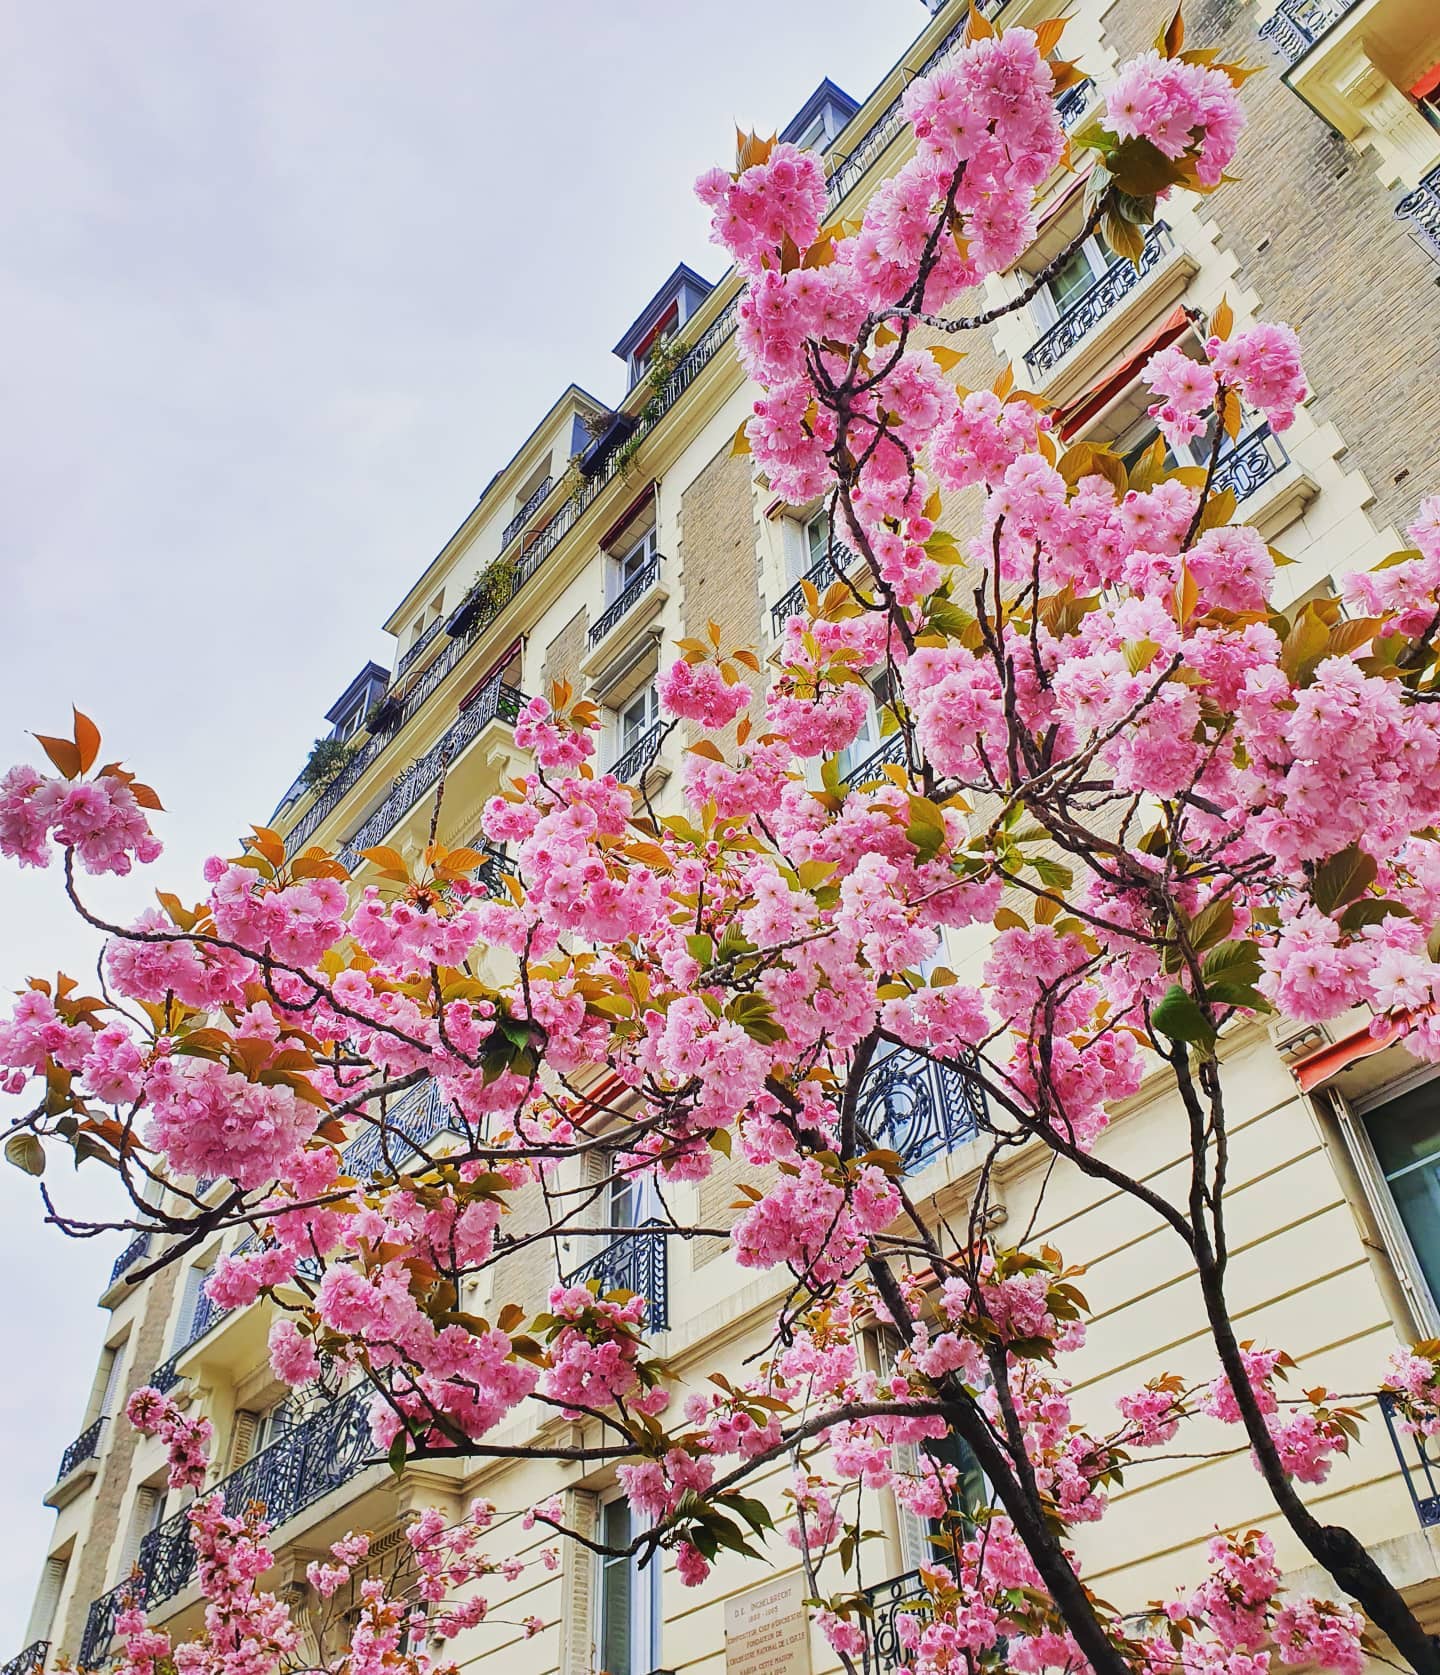 Sunday walk in Monmartre 🎨
.
.
.
.
.
#rediscoveringparis #paris #parisjetaime #jaimeparis #walkinparis #printemps #spring #weekendvibes #outdoors #coldoutside #pink #パリ